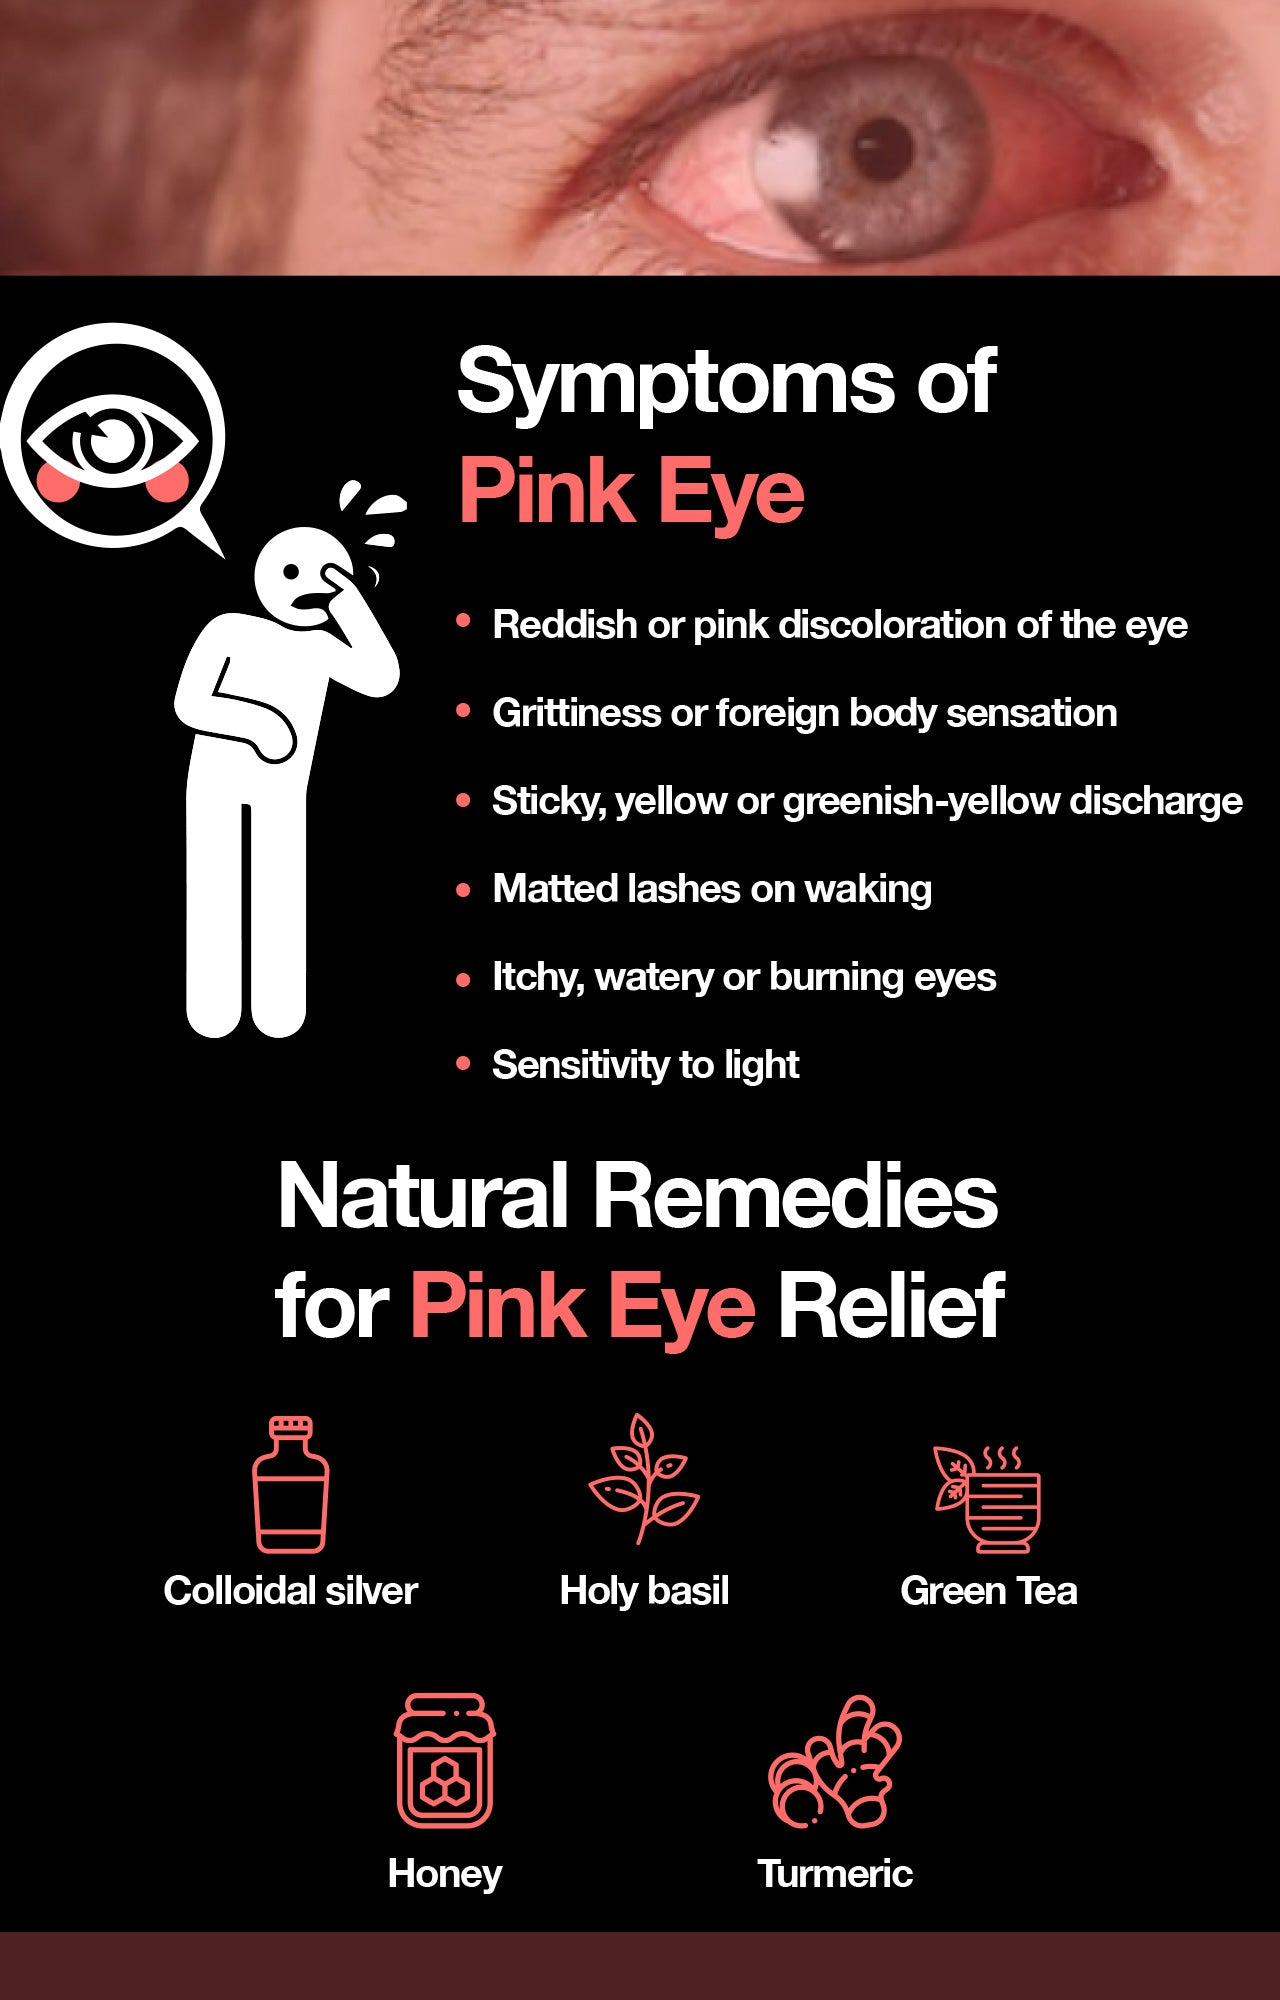 Pink eye symptoms plus natural remedies